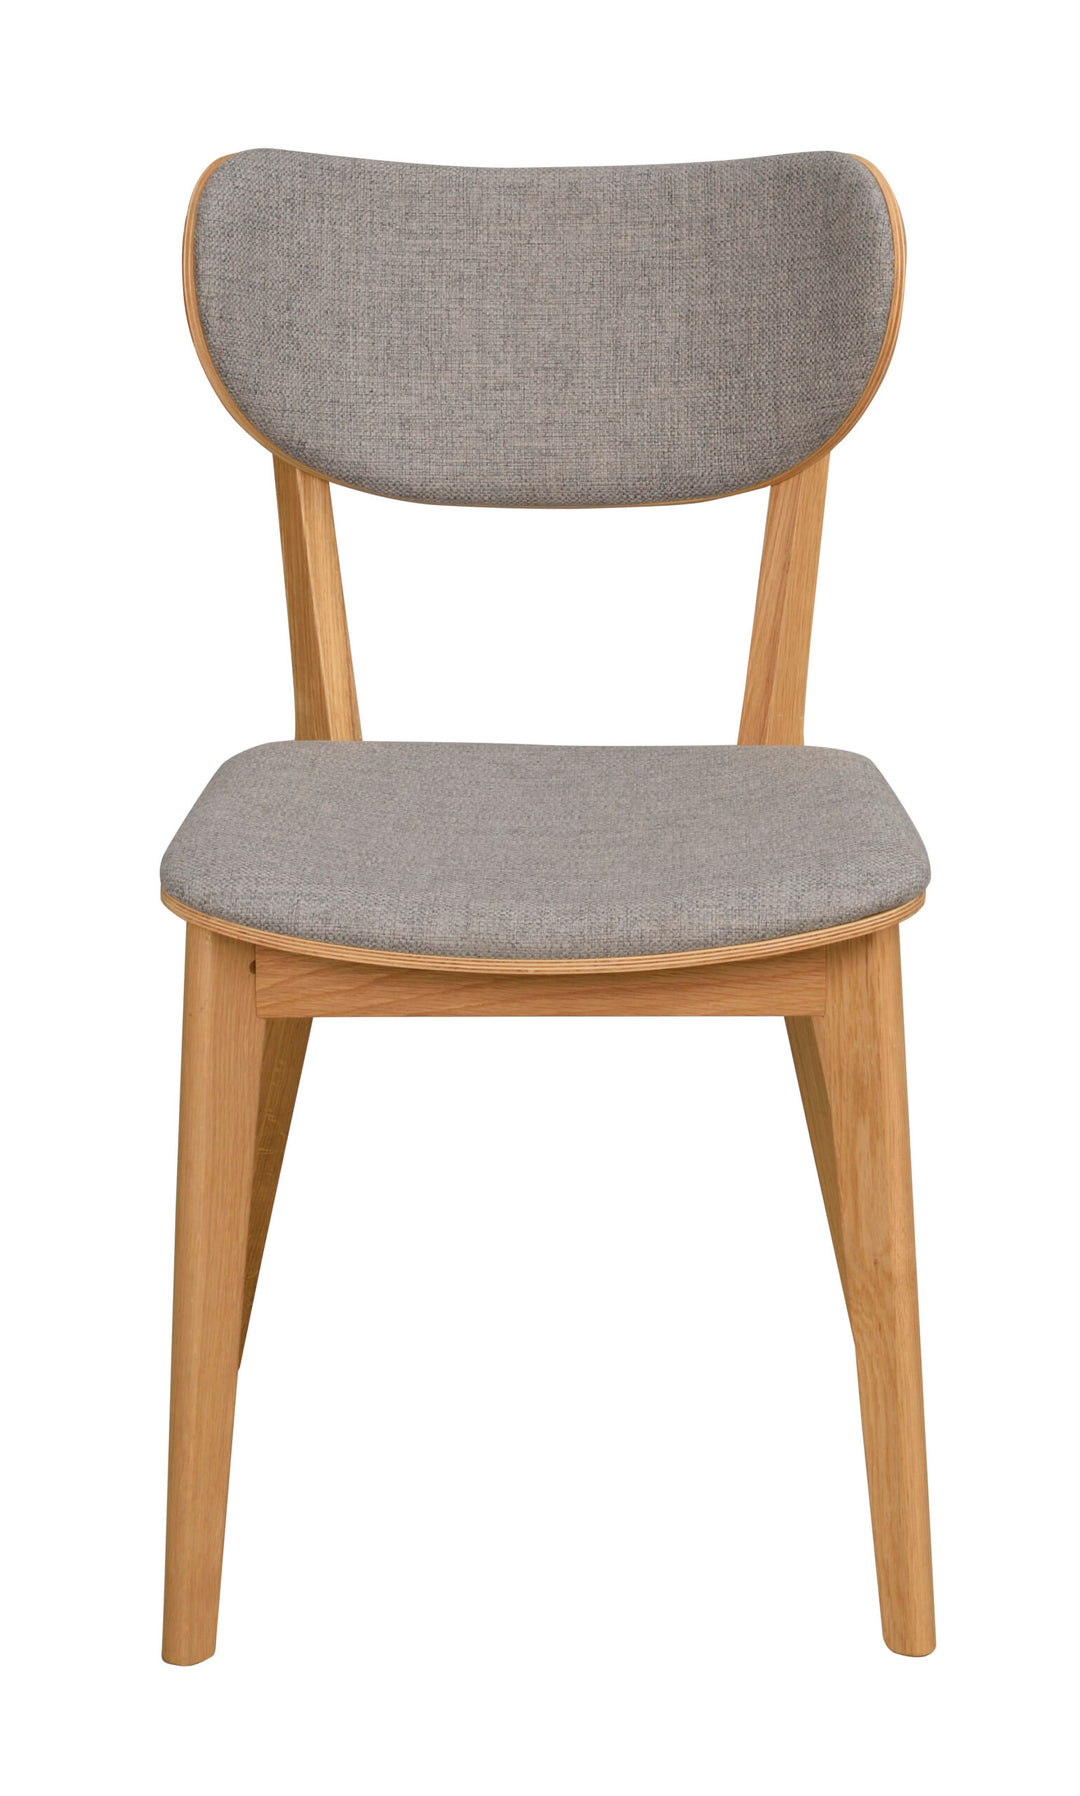 113037_a, kato stol, ek_ljusgrå R